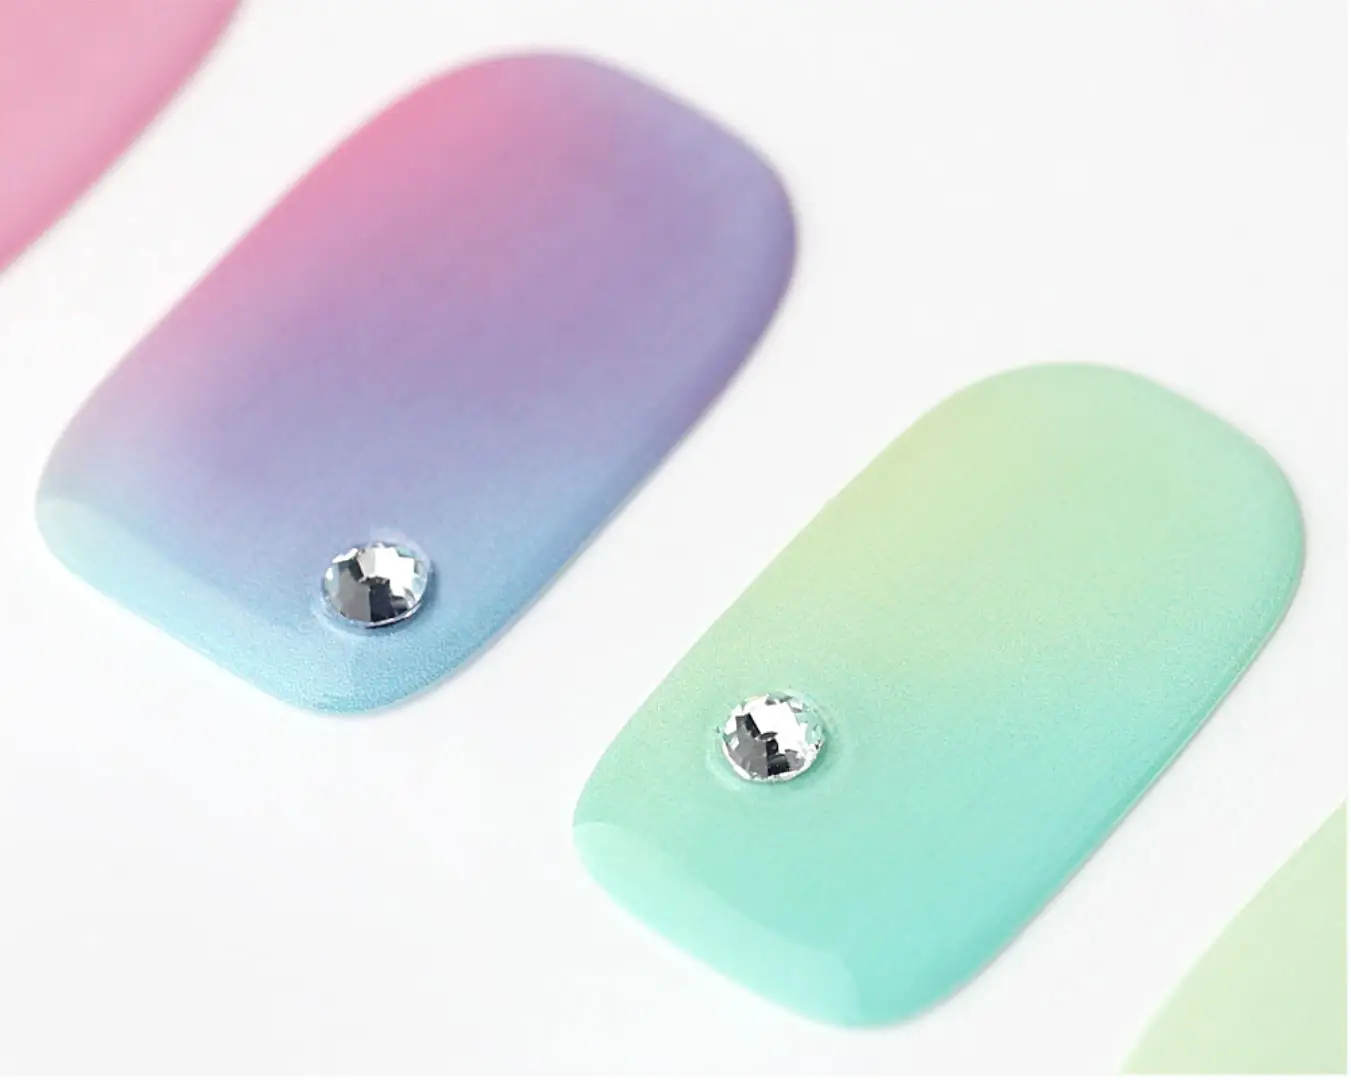 [Jungha] Semi-Cure-Zehen nagel aufkleber Zehen nagel aufkleber entwirft Pediküre-Aufkleber OEM erhältlich Made in Korea -Patricia